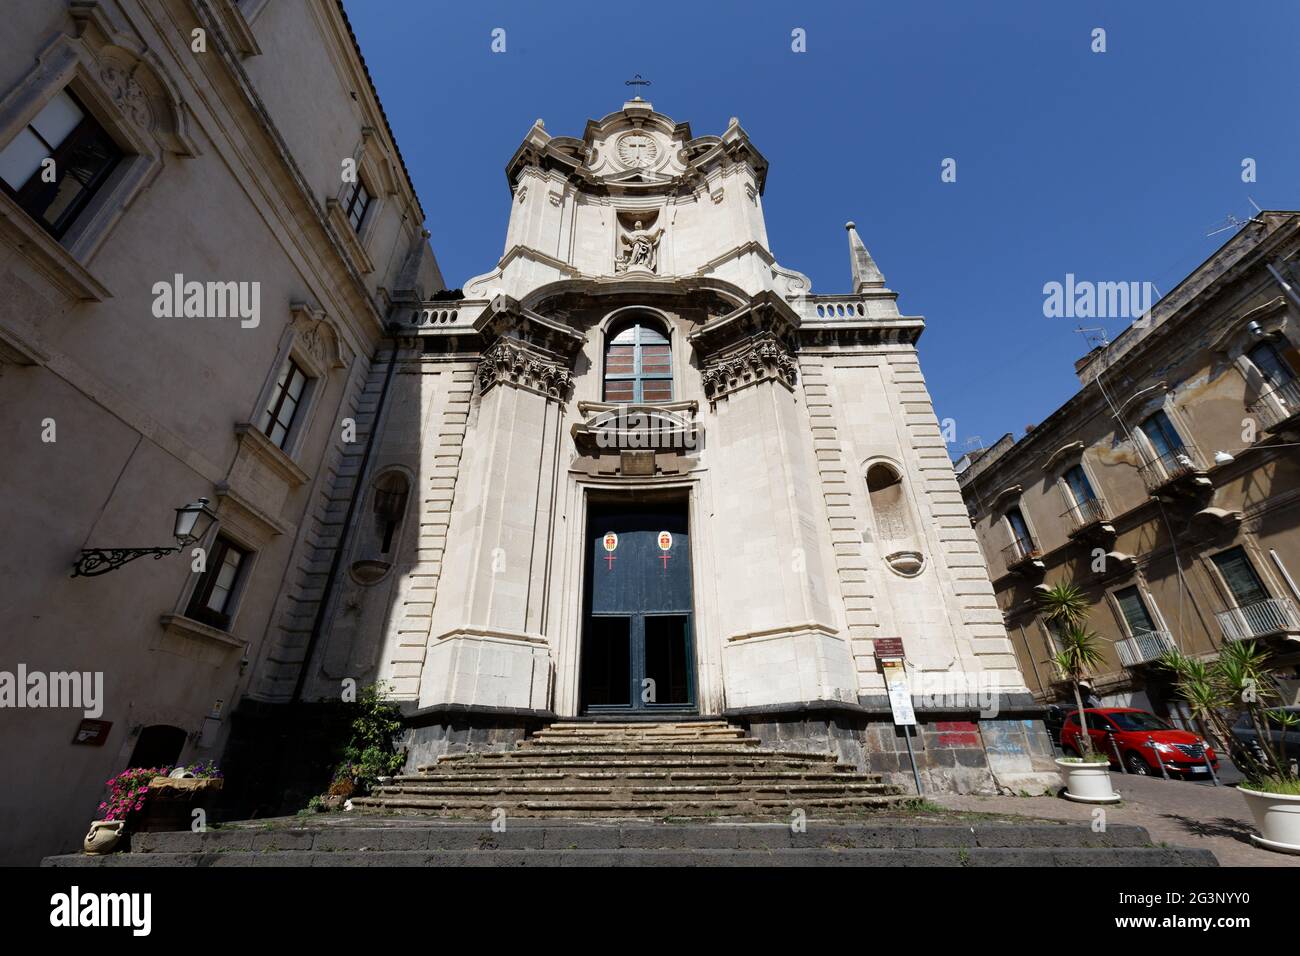 Chiesa di San Camillo de' Lellis - Catania Italy Stock Photo